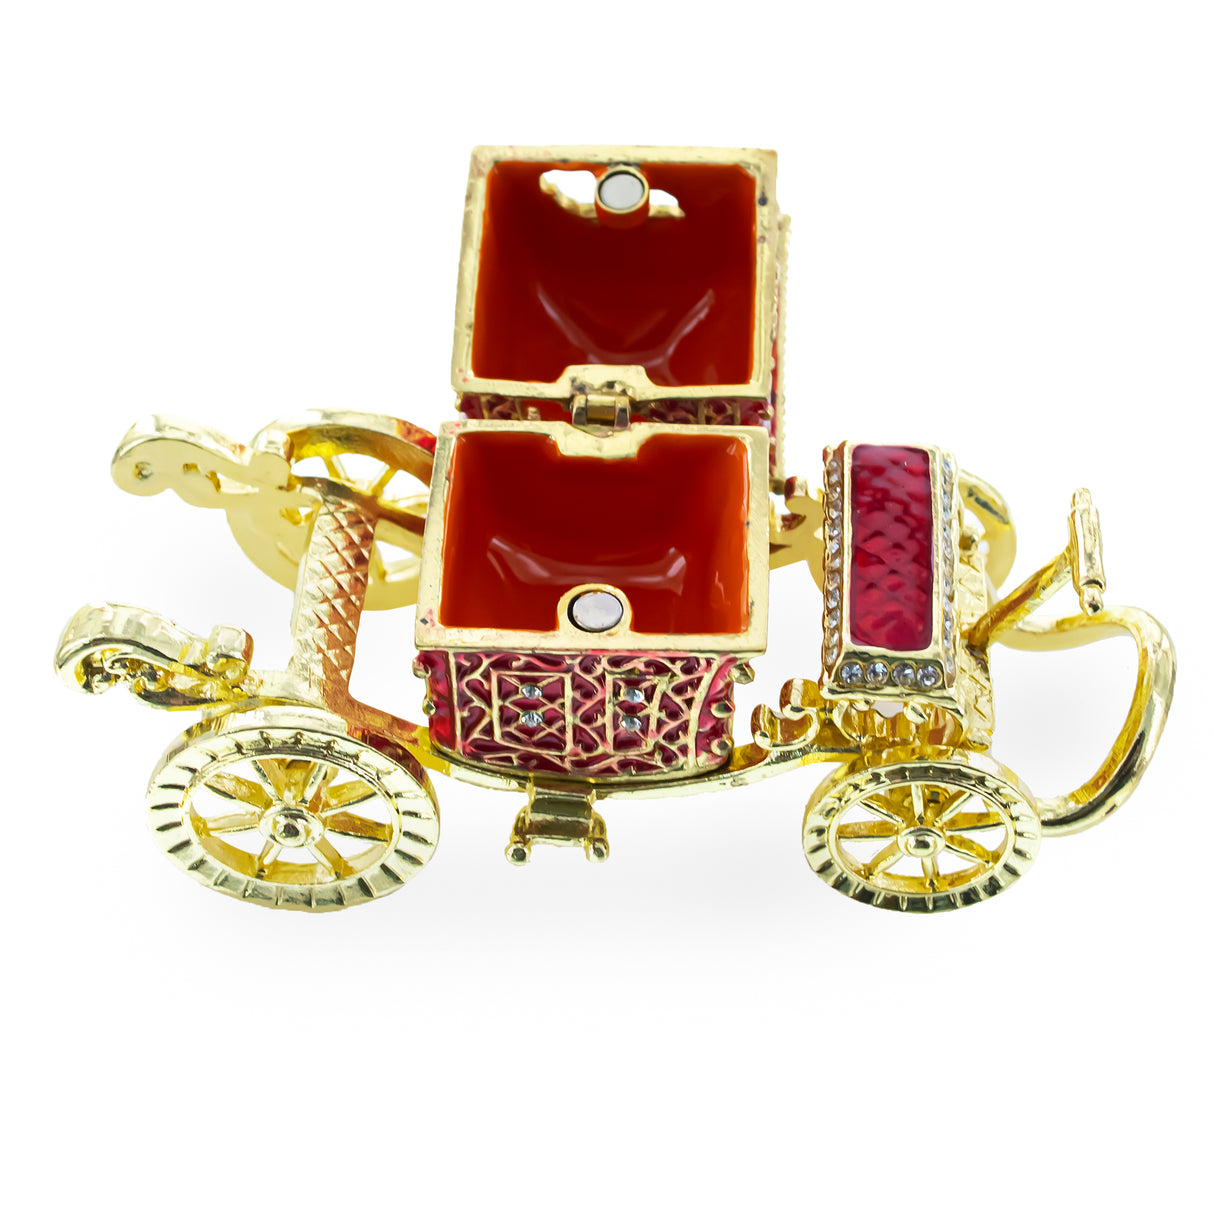 Coronation Coach Jewelry Trinket Box Figurine ,dimensions in inches: 2.8 x 4.4 x 4.41